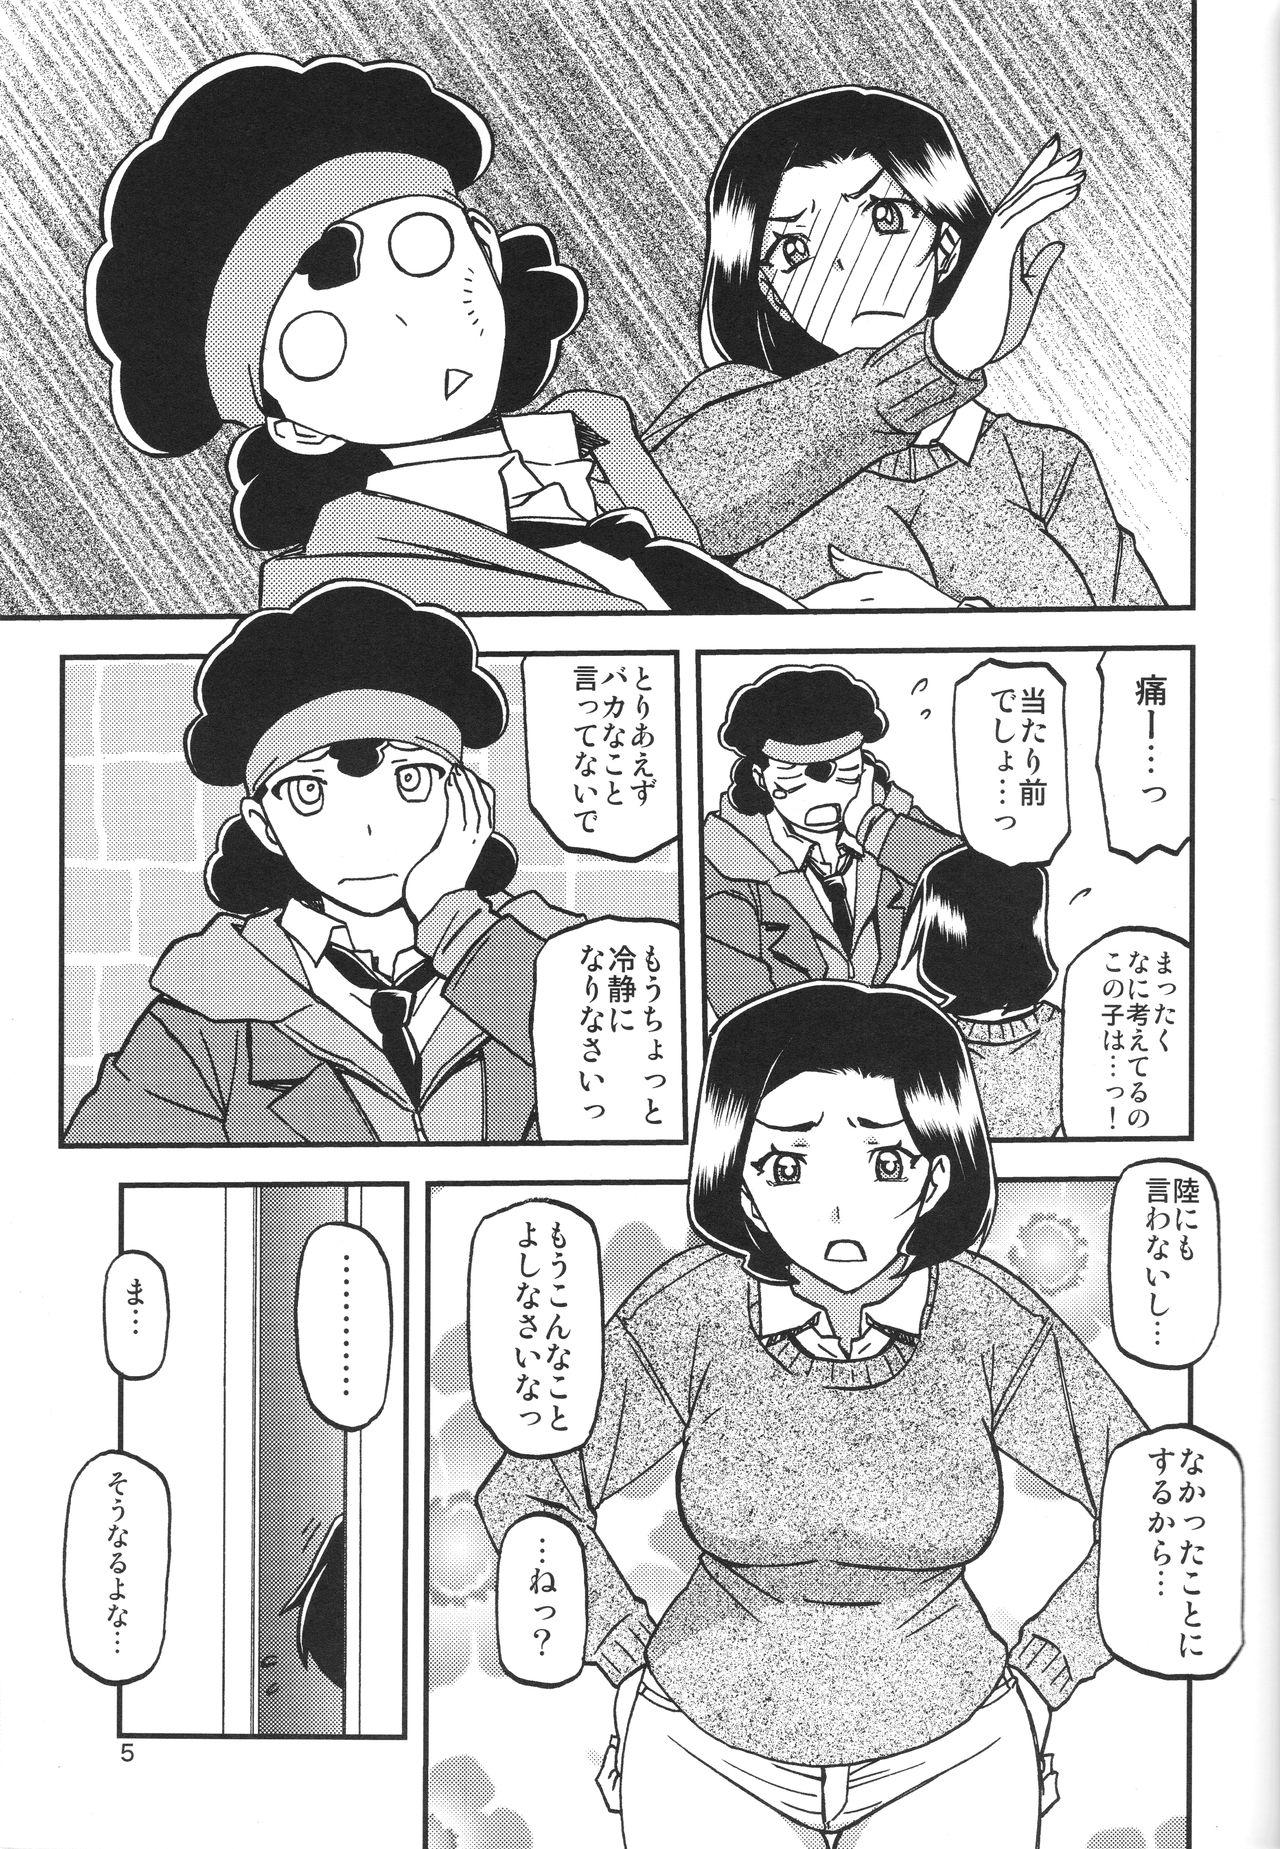 Menage Akebi no Mi - Misora Bedroom - Page 4